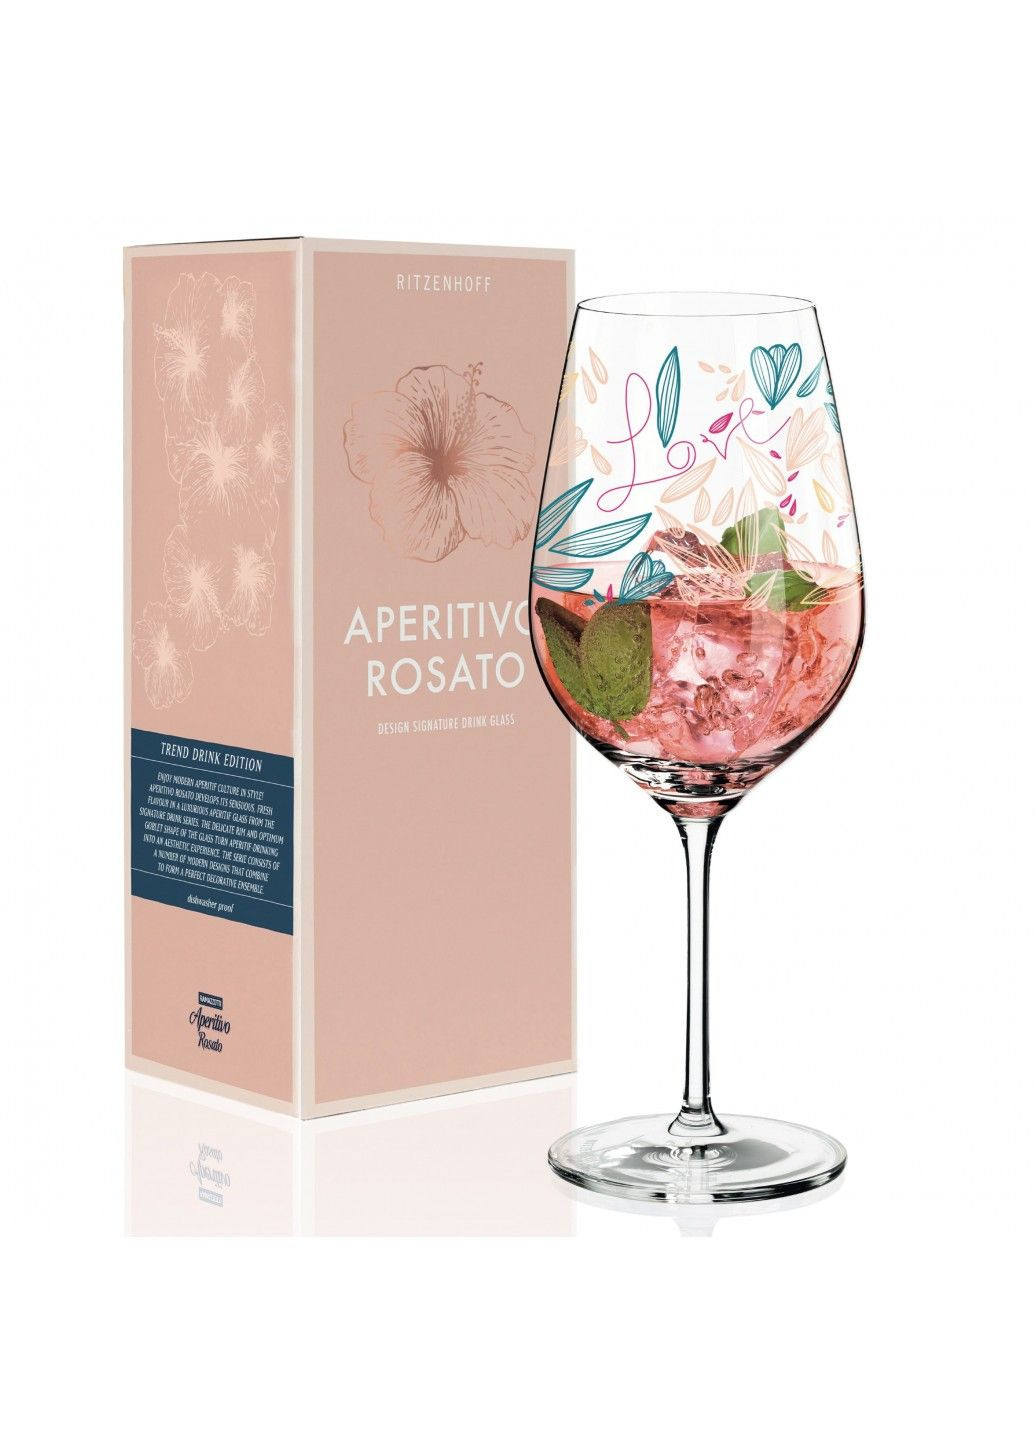 Келих для ігристих напоїв "Aperitivo Rosato" від Véronique Jacquart; 605 мл Ritzenhoff (290851442)